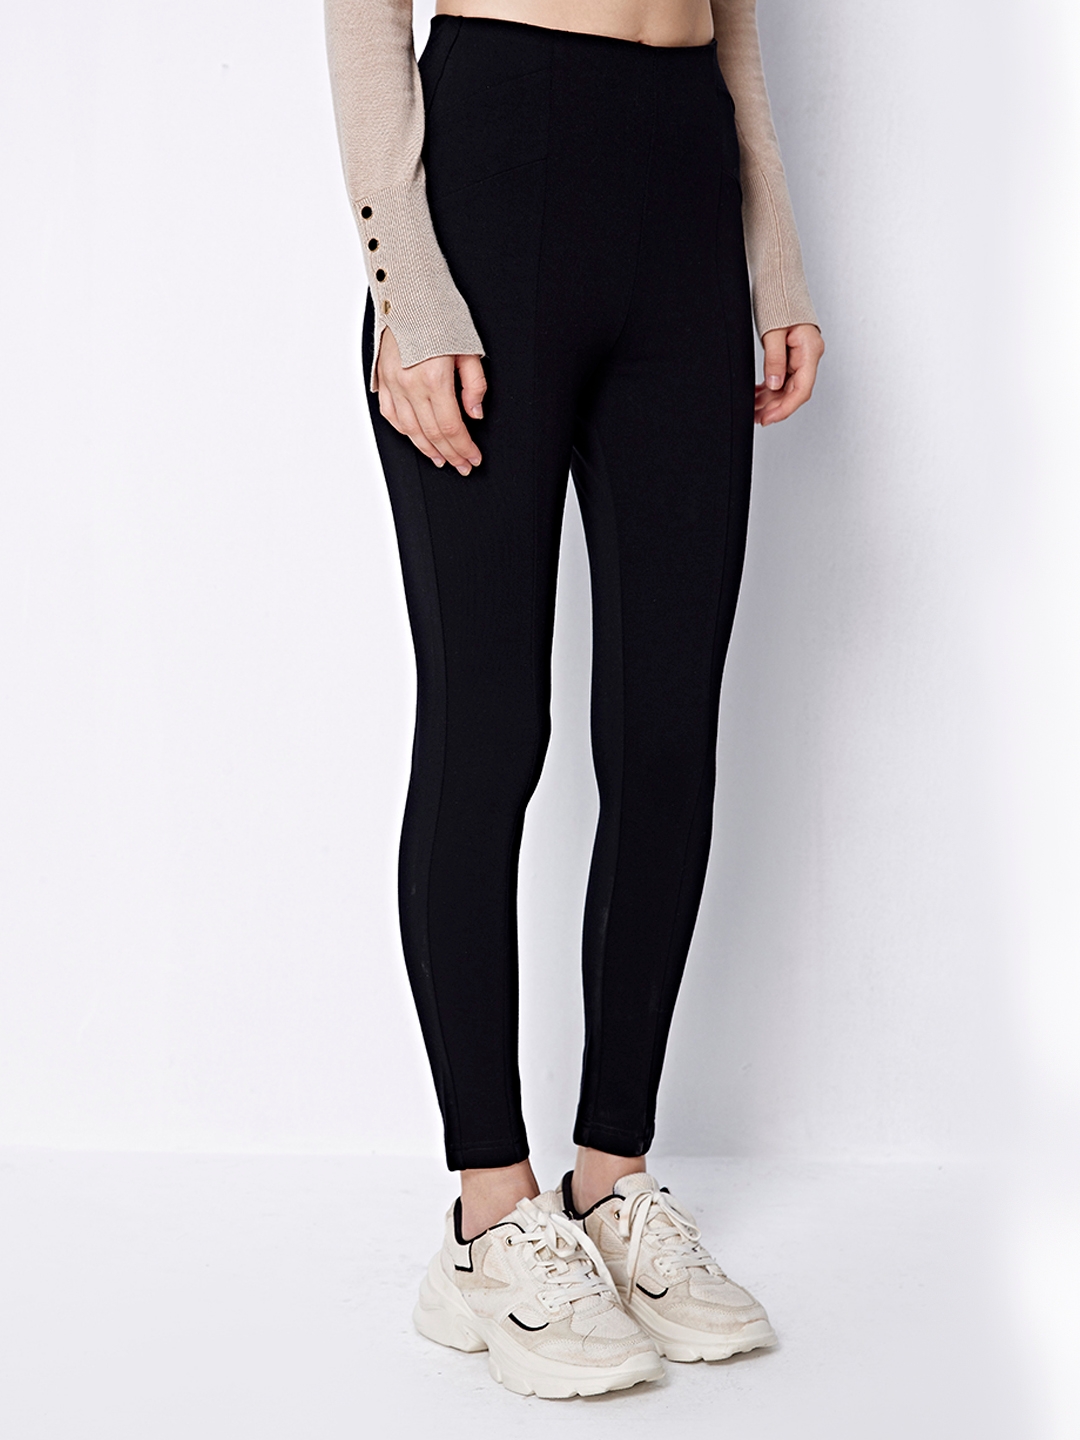 rundholz dip - Leggings long opaque jersey stretch black 256 0203 -  stilechtonline.de - avant-garde womens fashion